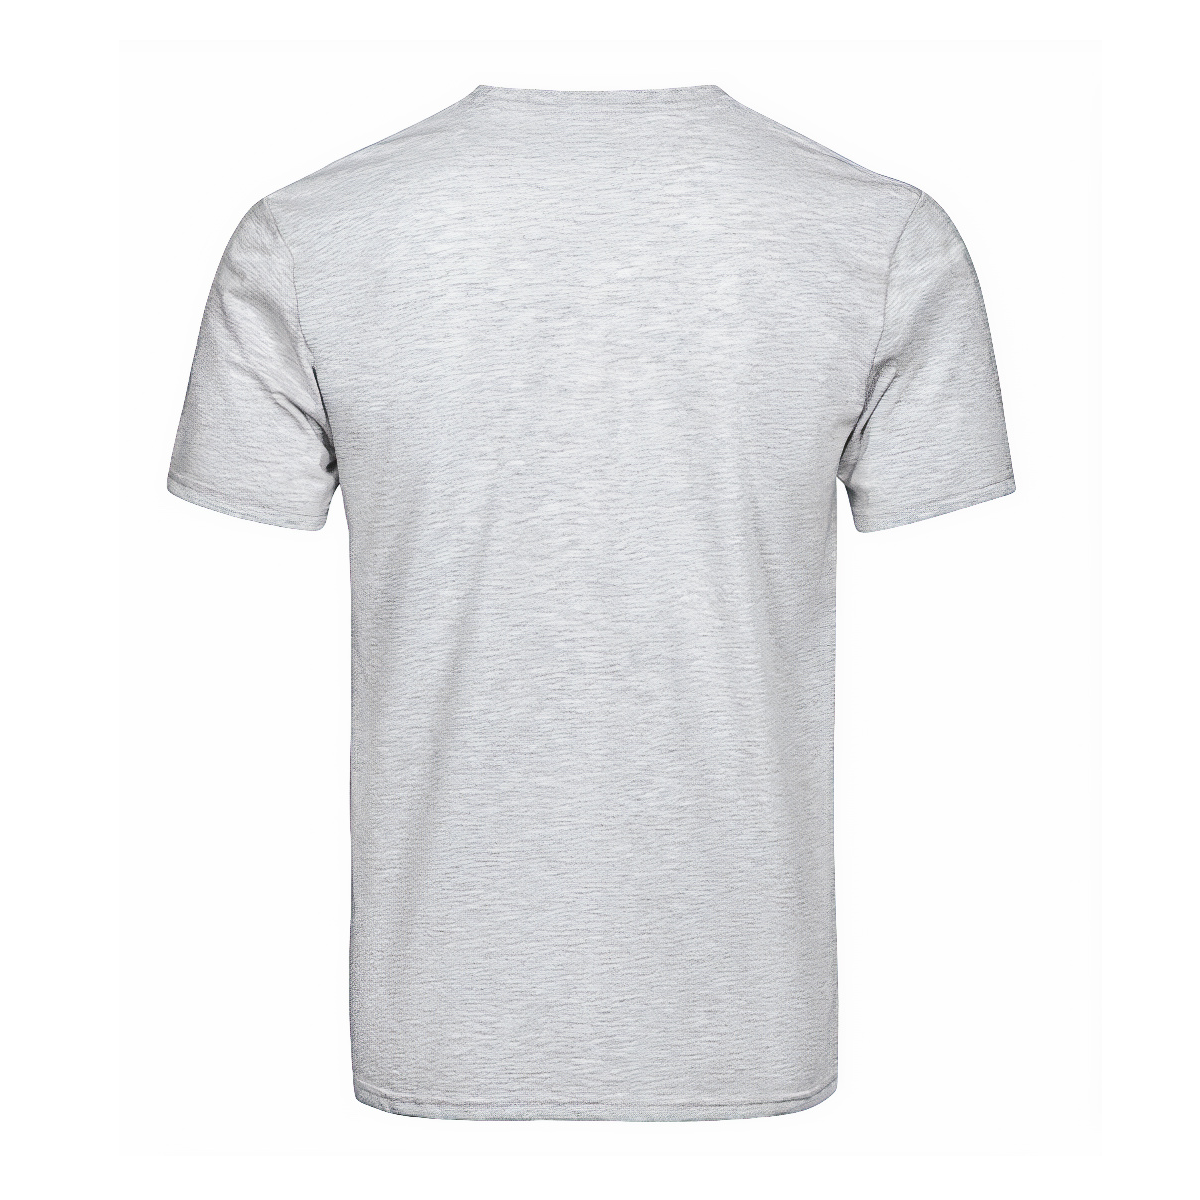 Nesbitt (or Nisbet) Tartan Crest T-shirt - I'm not yelling style